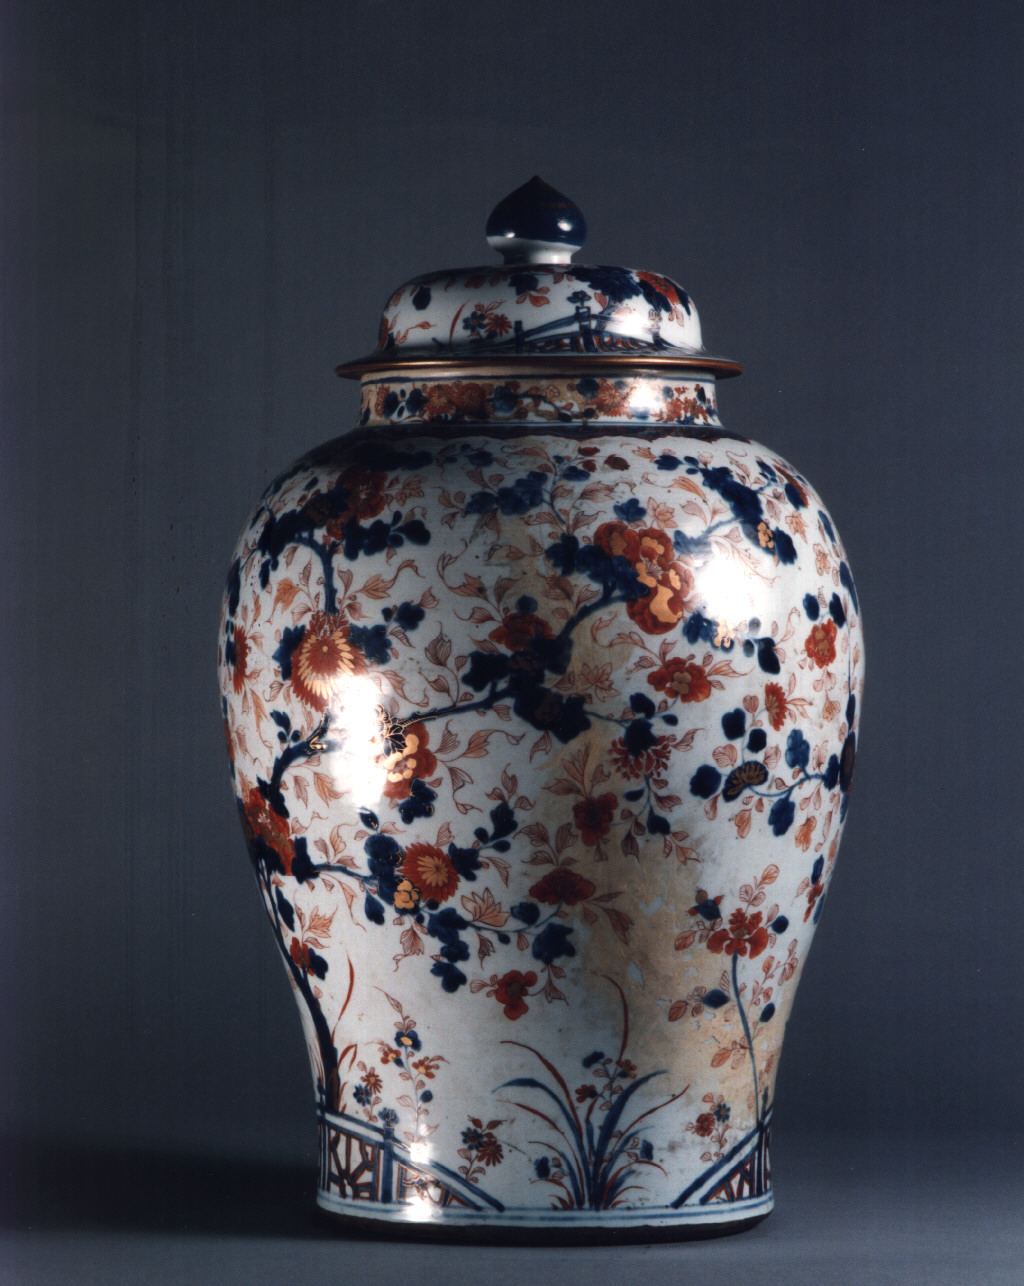 motivi decorativi floreali (vaso) - manifattura cinese (sec. XVIII)